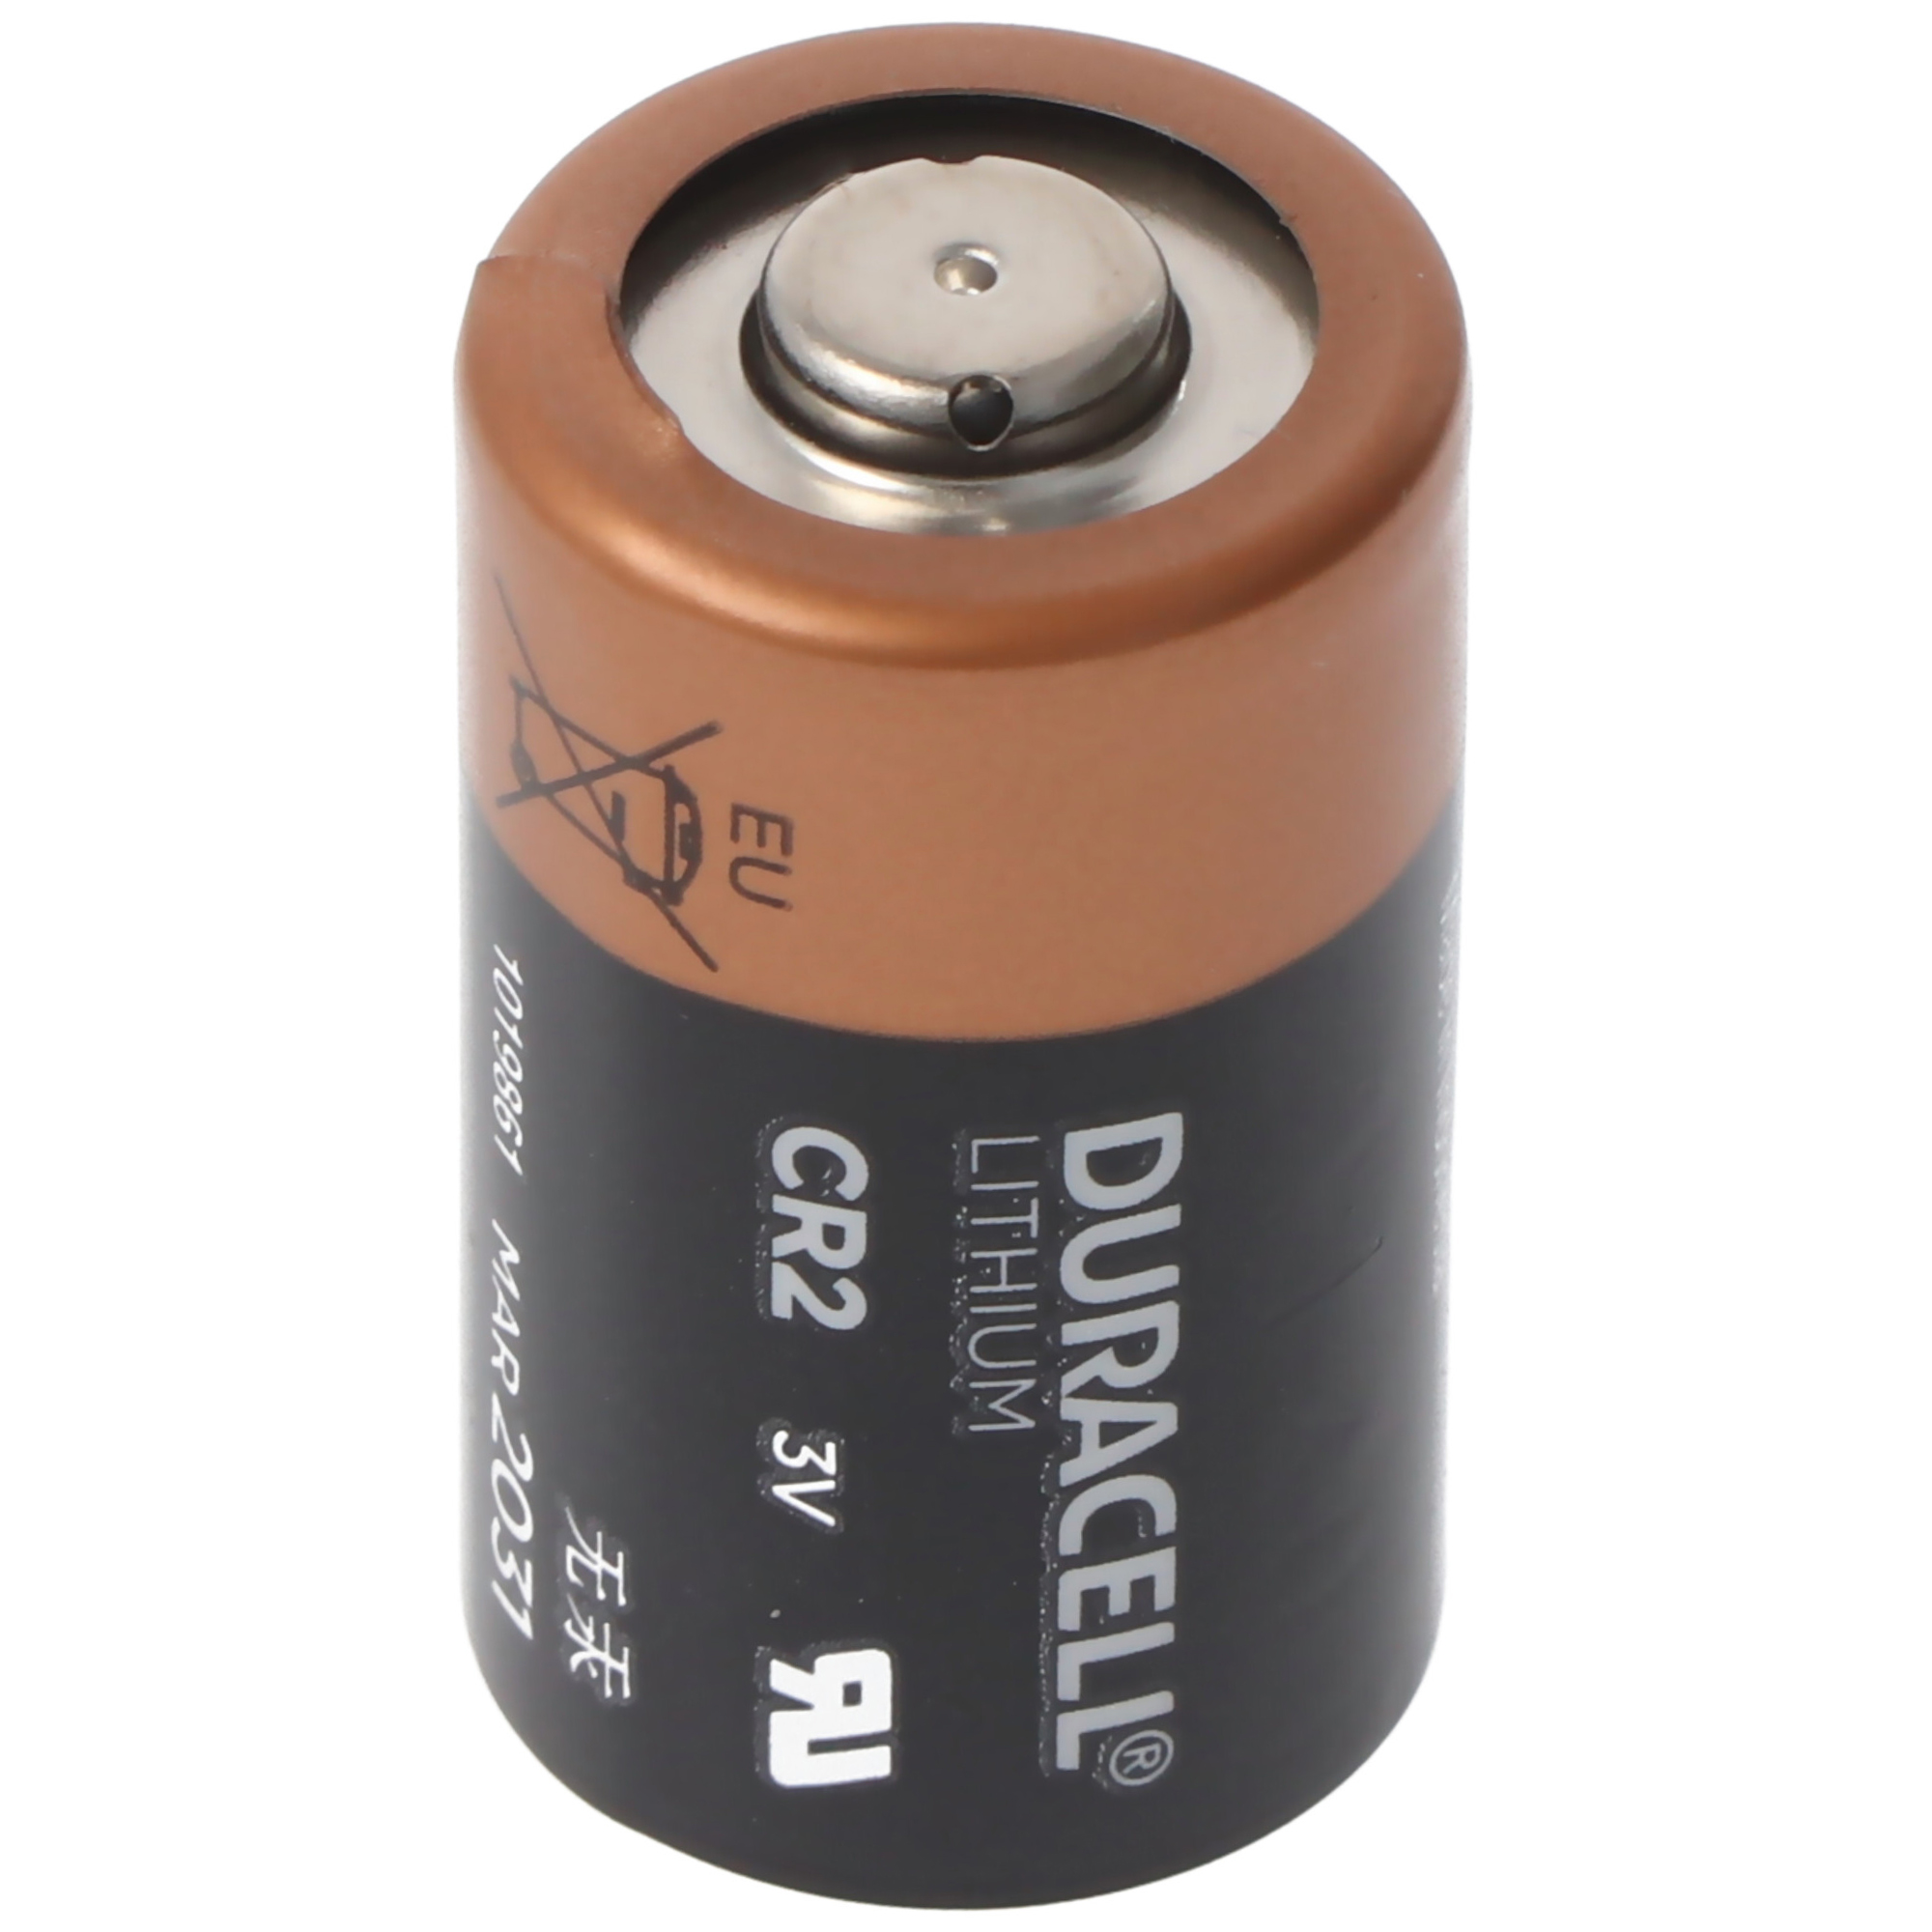 10x Duracell Photobatterie CR2 Lithium 3V max. 900mAh CR15H270